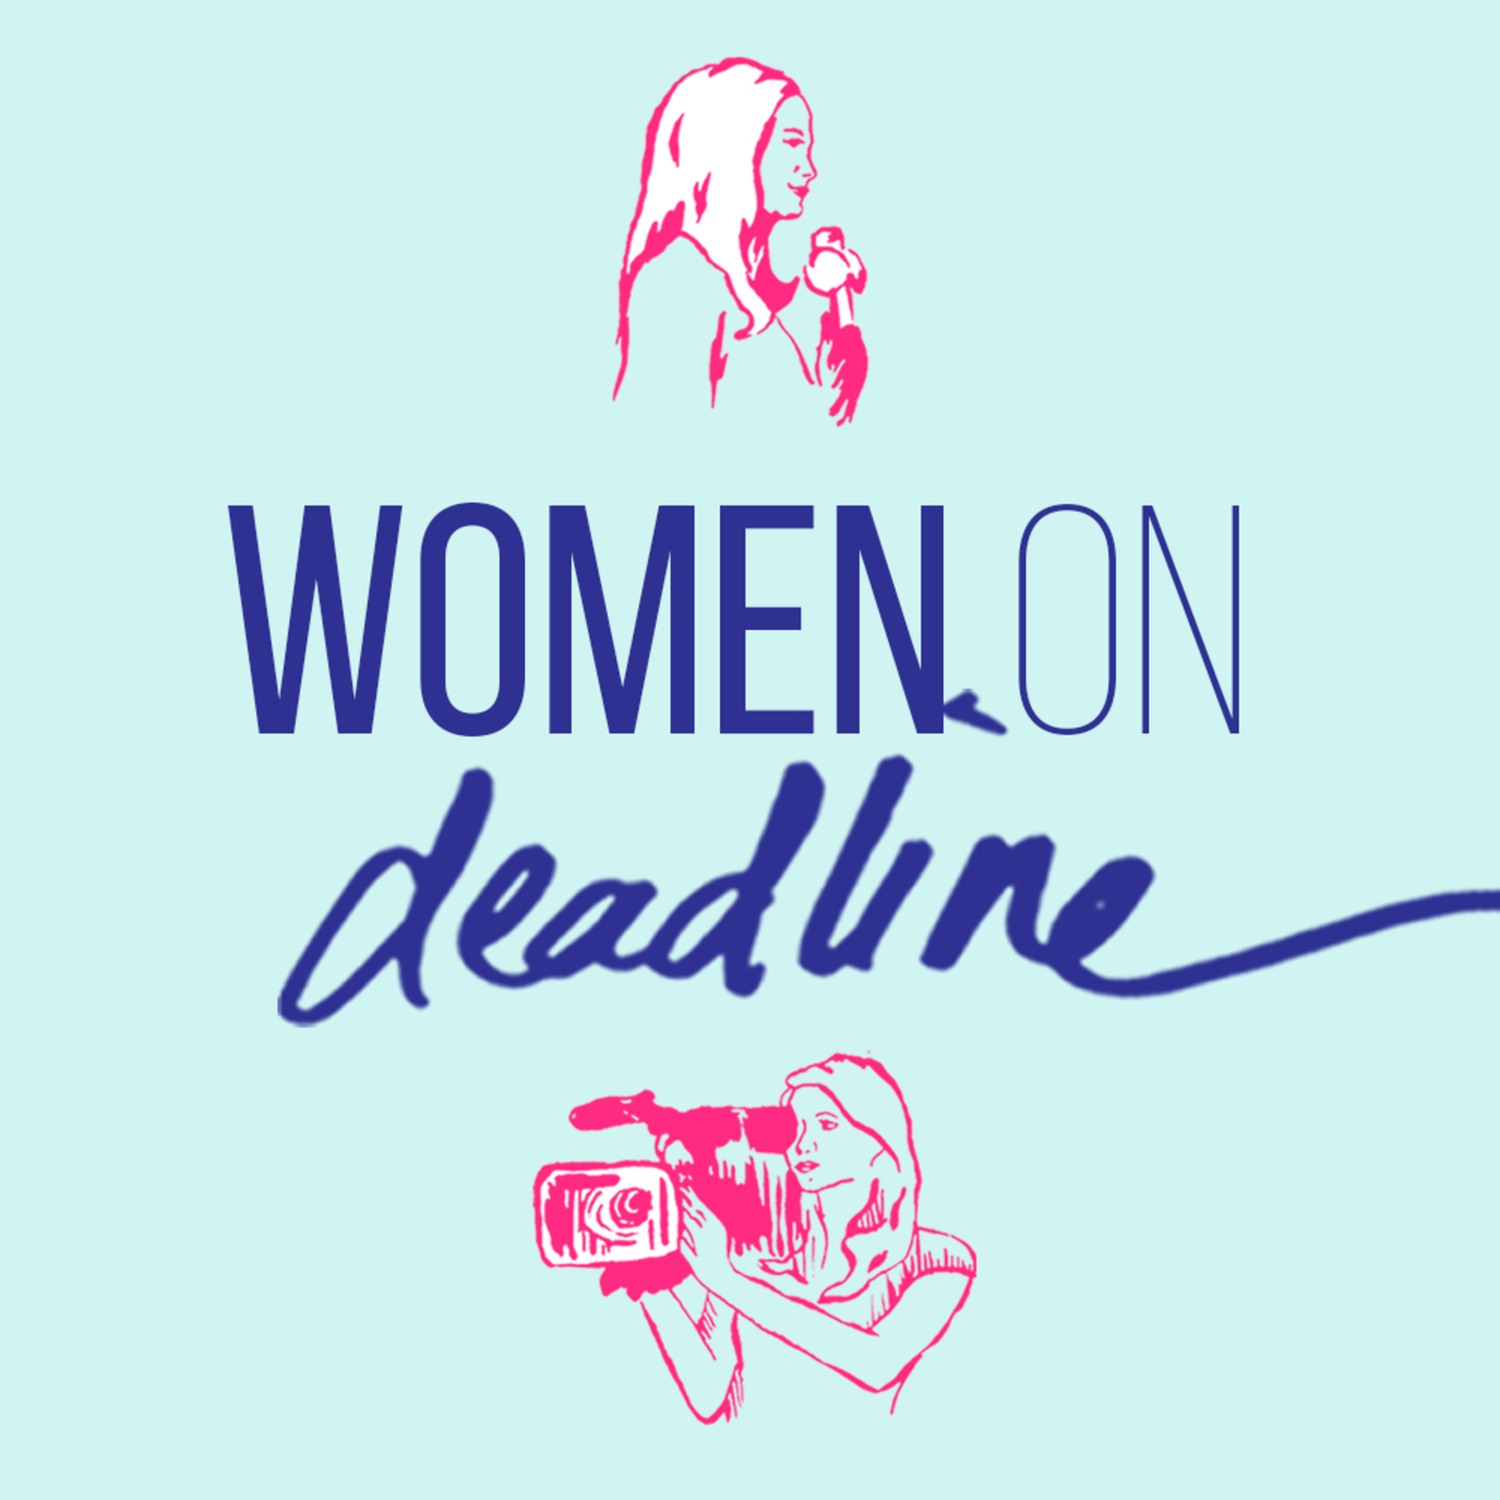 Women on Deadline: Her Experience in TV News